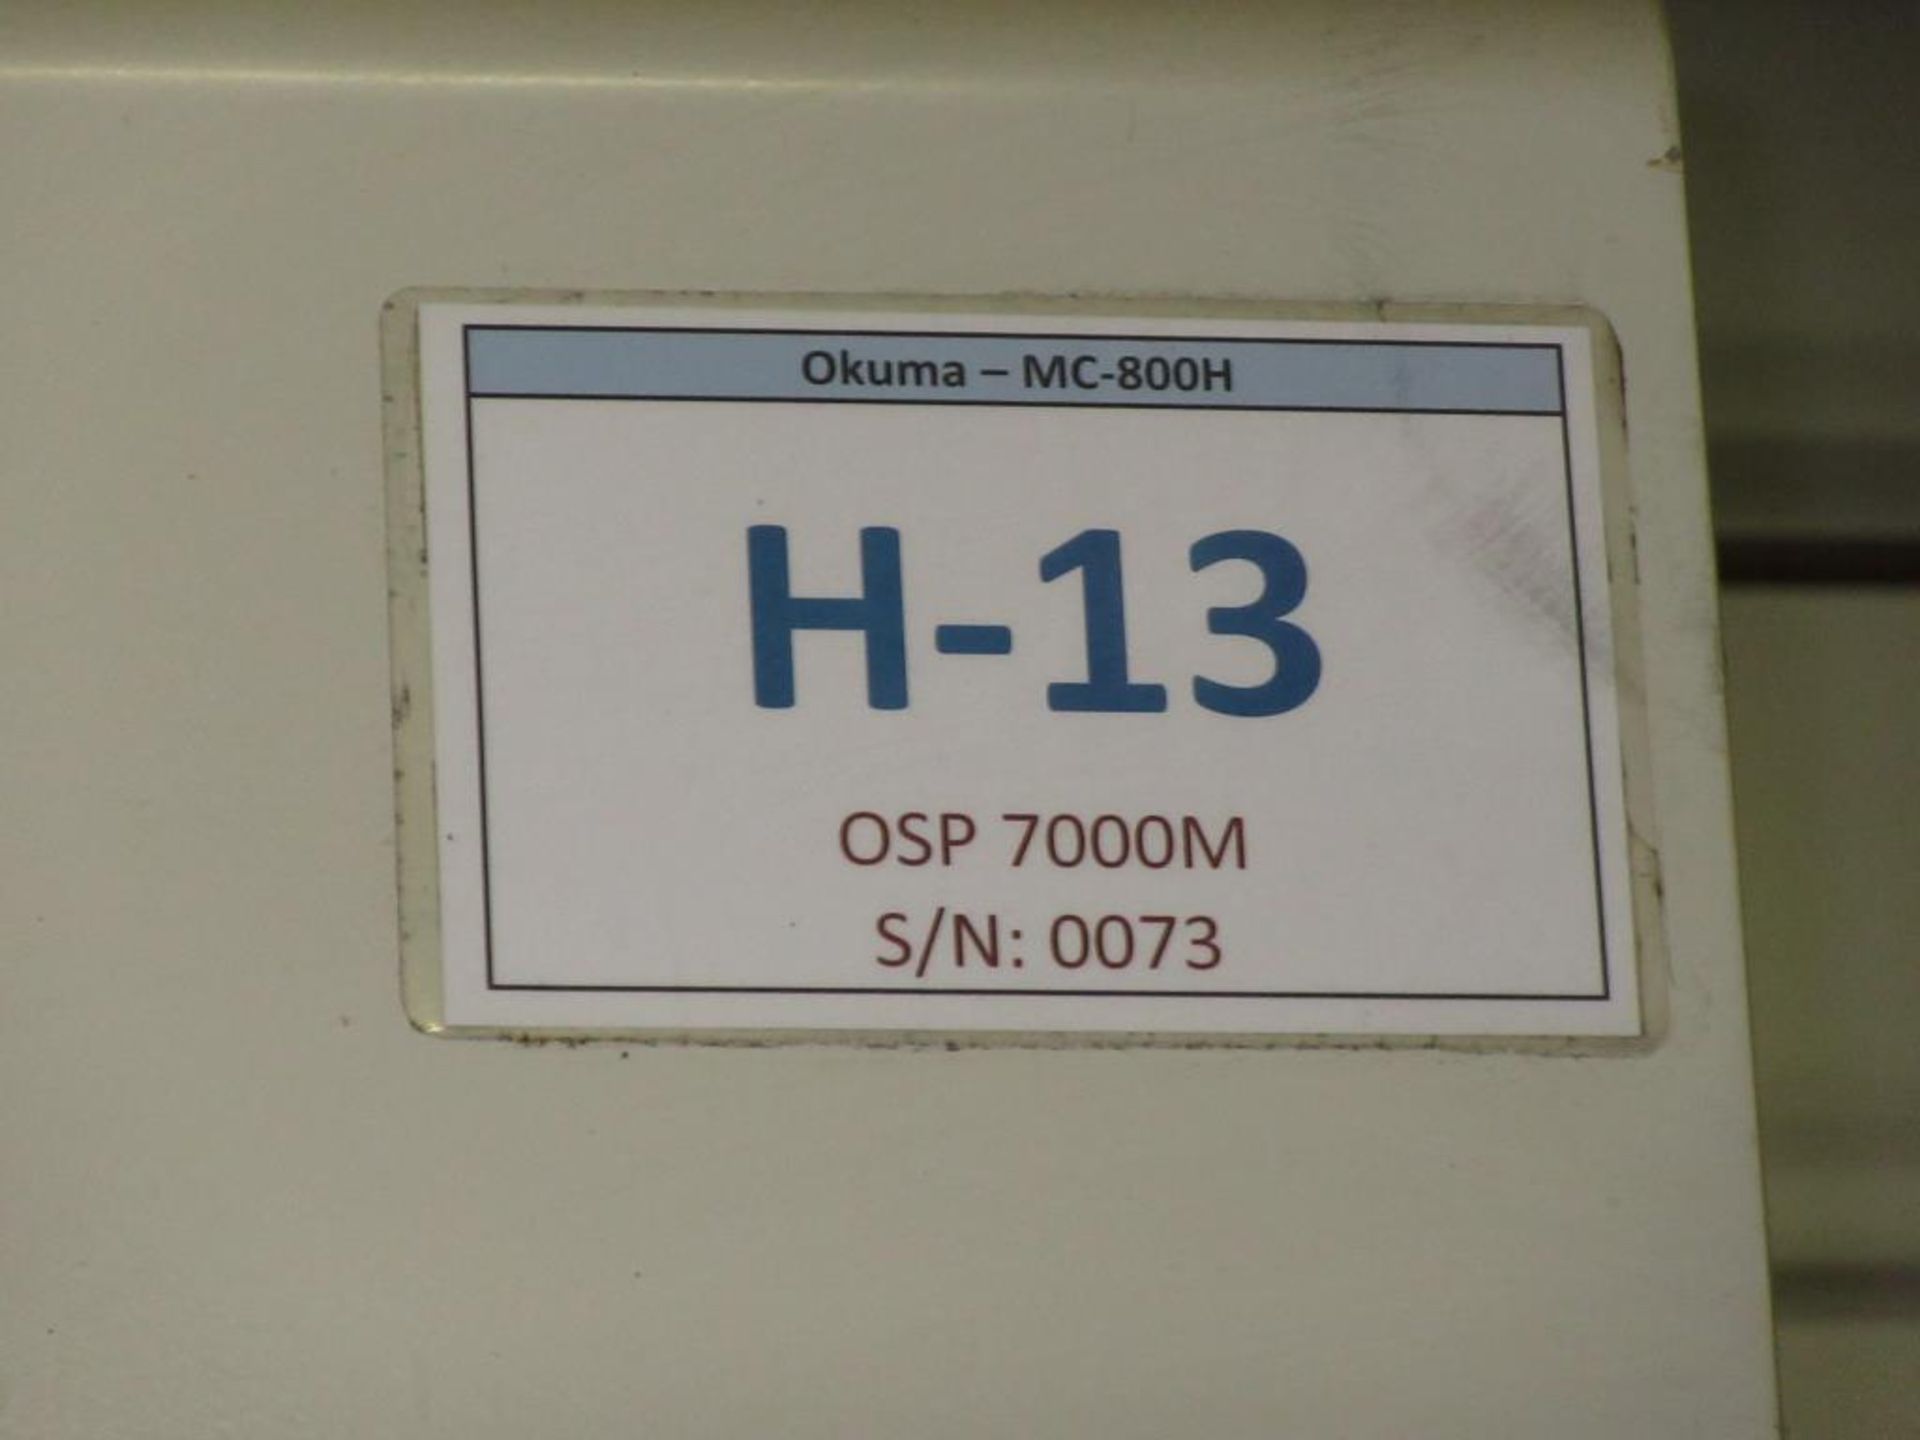 Okuma MC-800H. 1999 - CNC Horizontal Machining Center with OSP 7000M 3-Axis Control Panel, 32" - Image 21 of 24